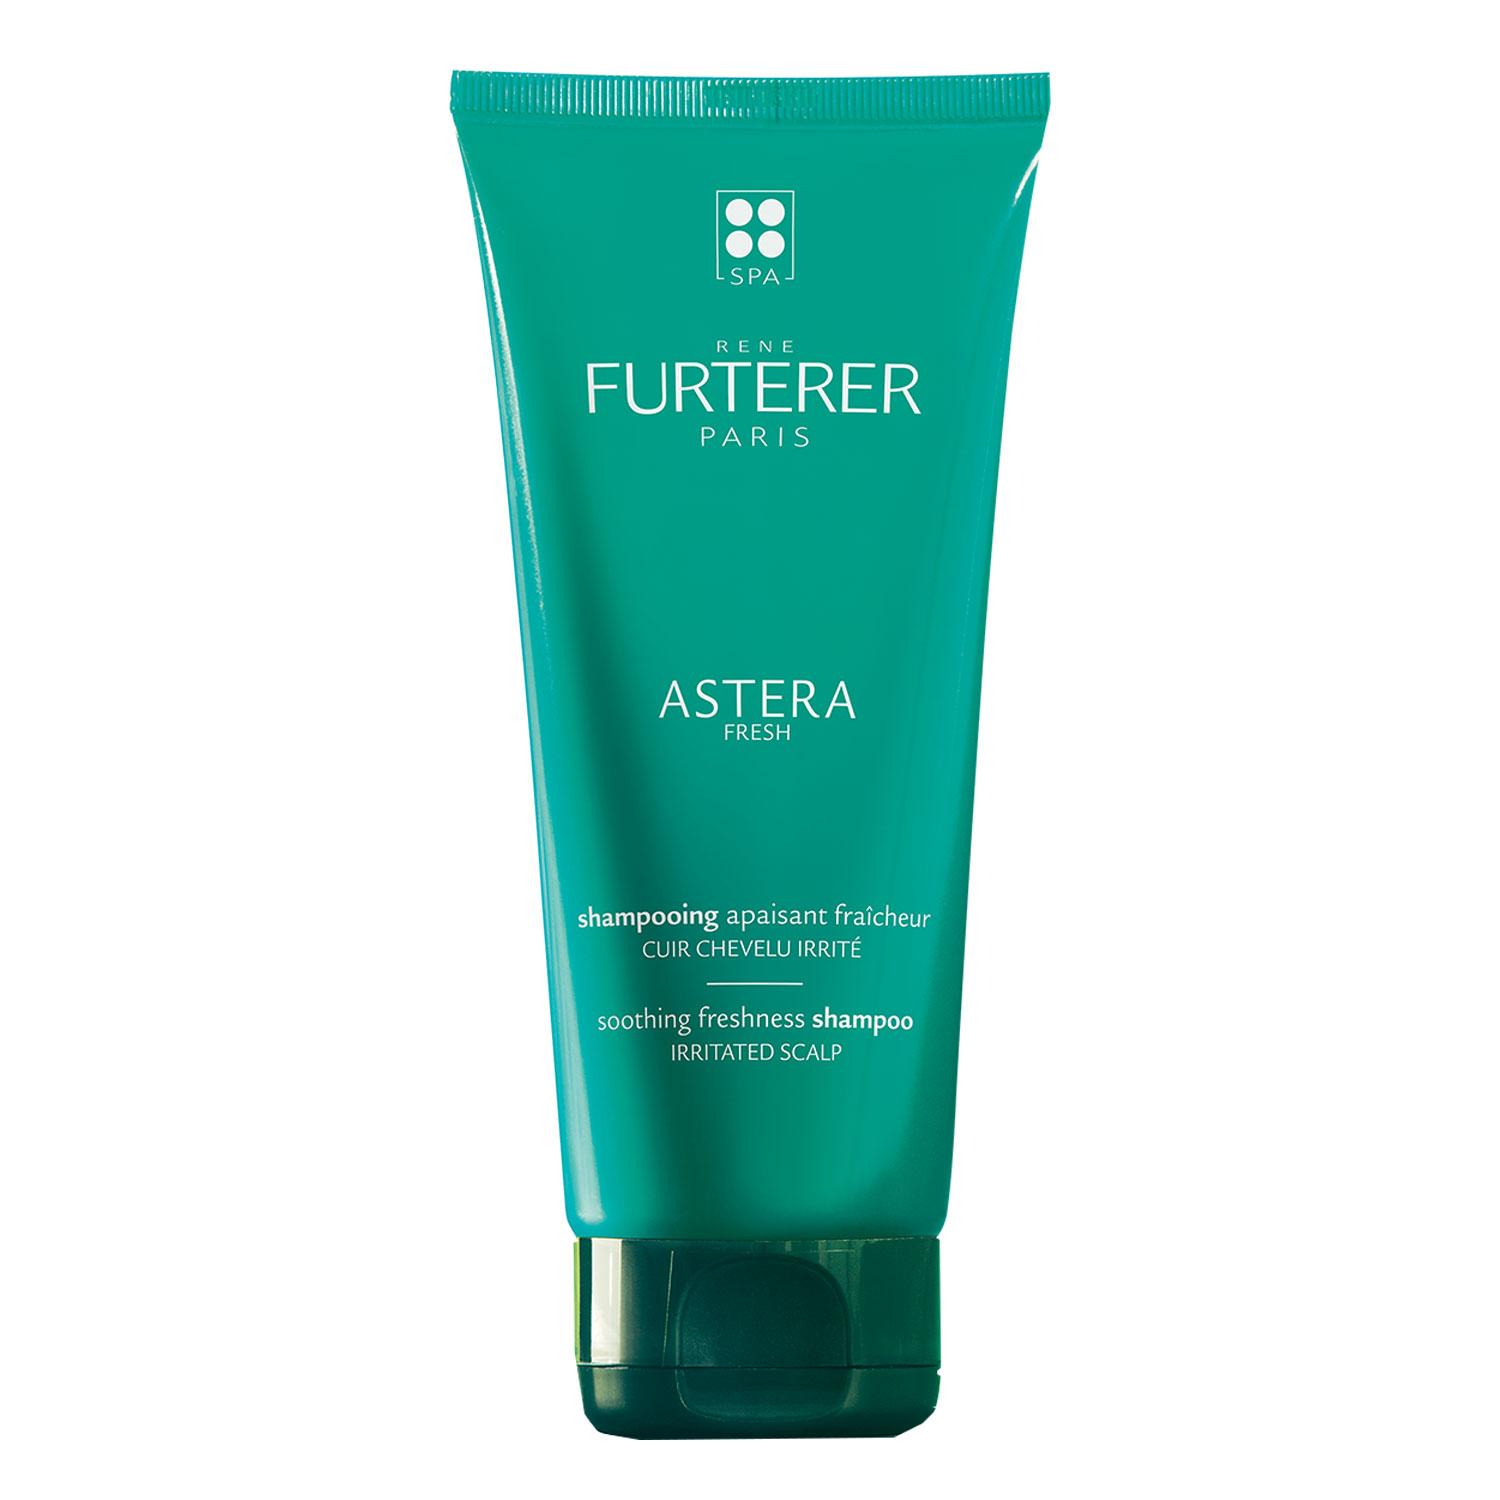 Astera Fresh - Soothing Freshness Shampoo